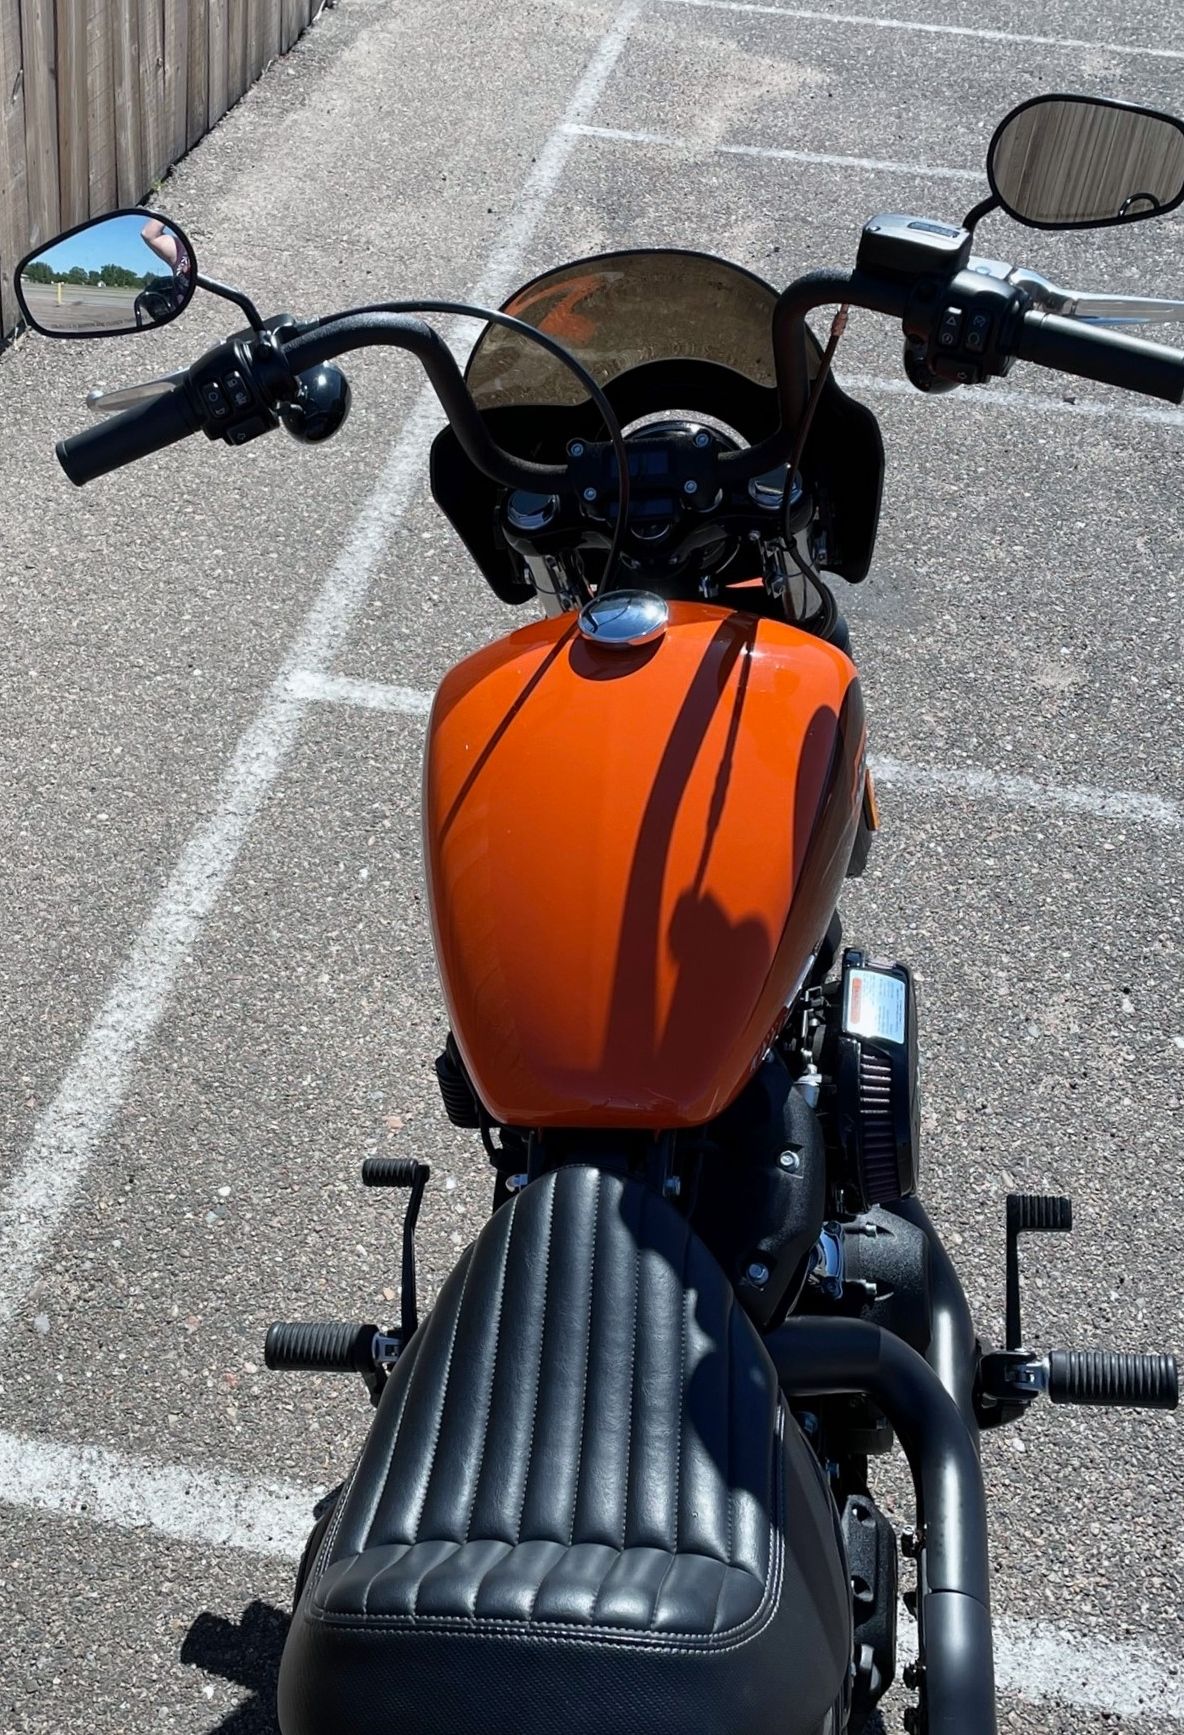 2021 Harley-Davidson Street Bob® 114 in Dodge City, Kansas - Photo 4